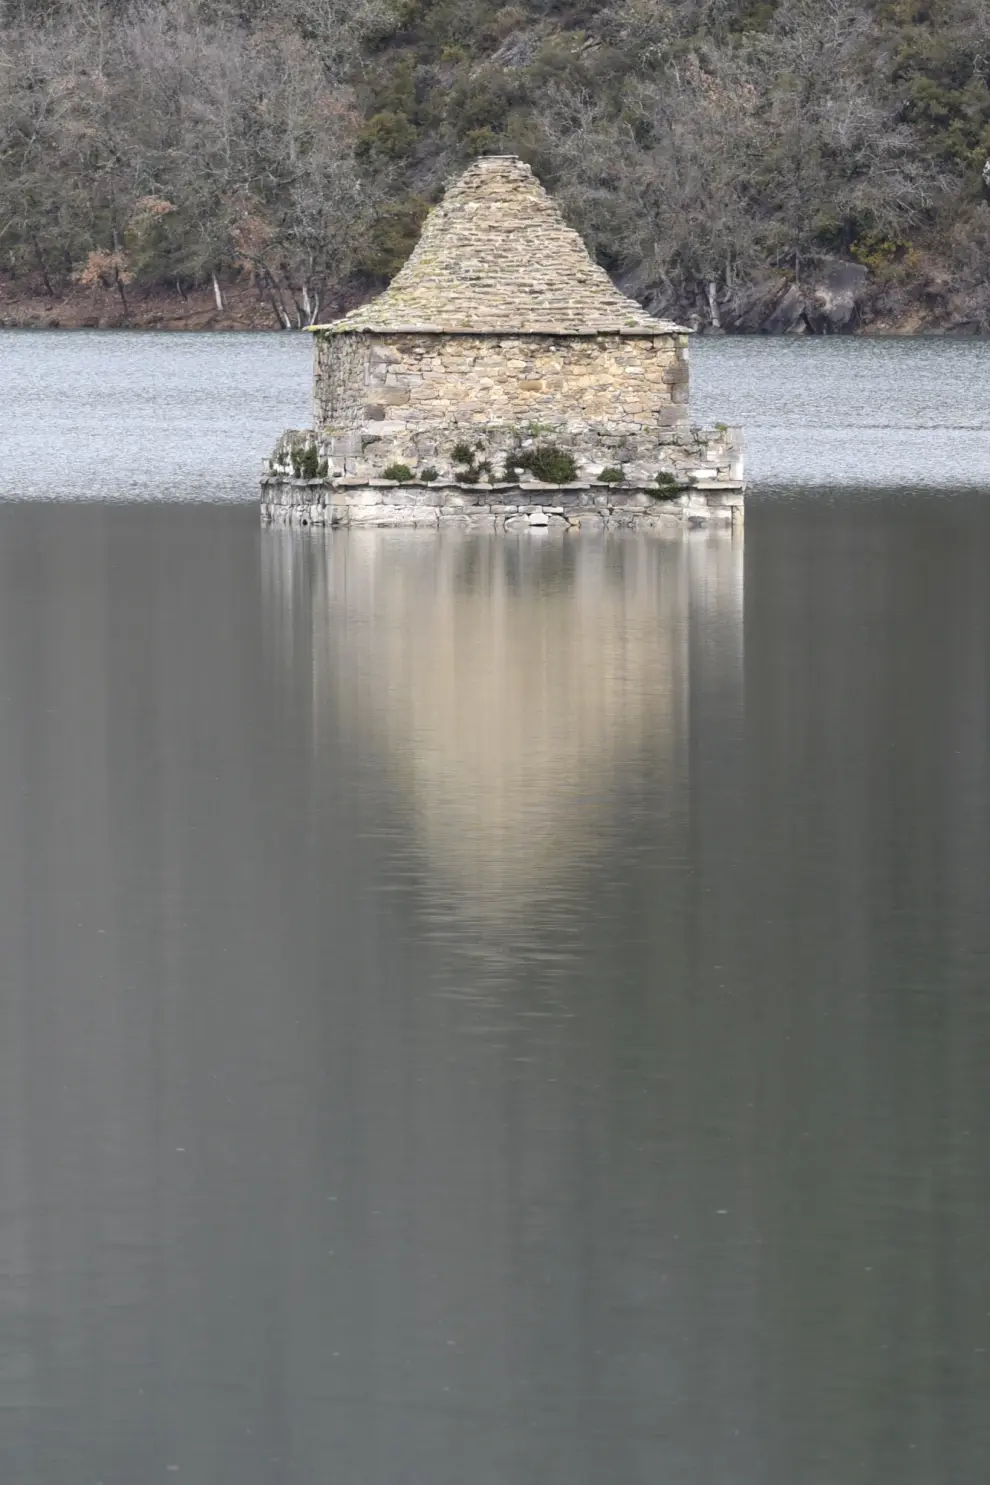 El embalse de Mediano este domingo. La torre de la iglesia apenas emerge sobre la lámina de agua.